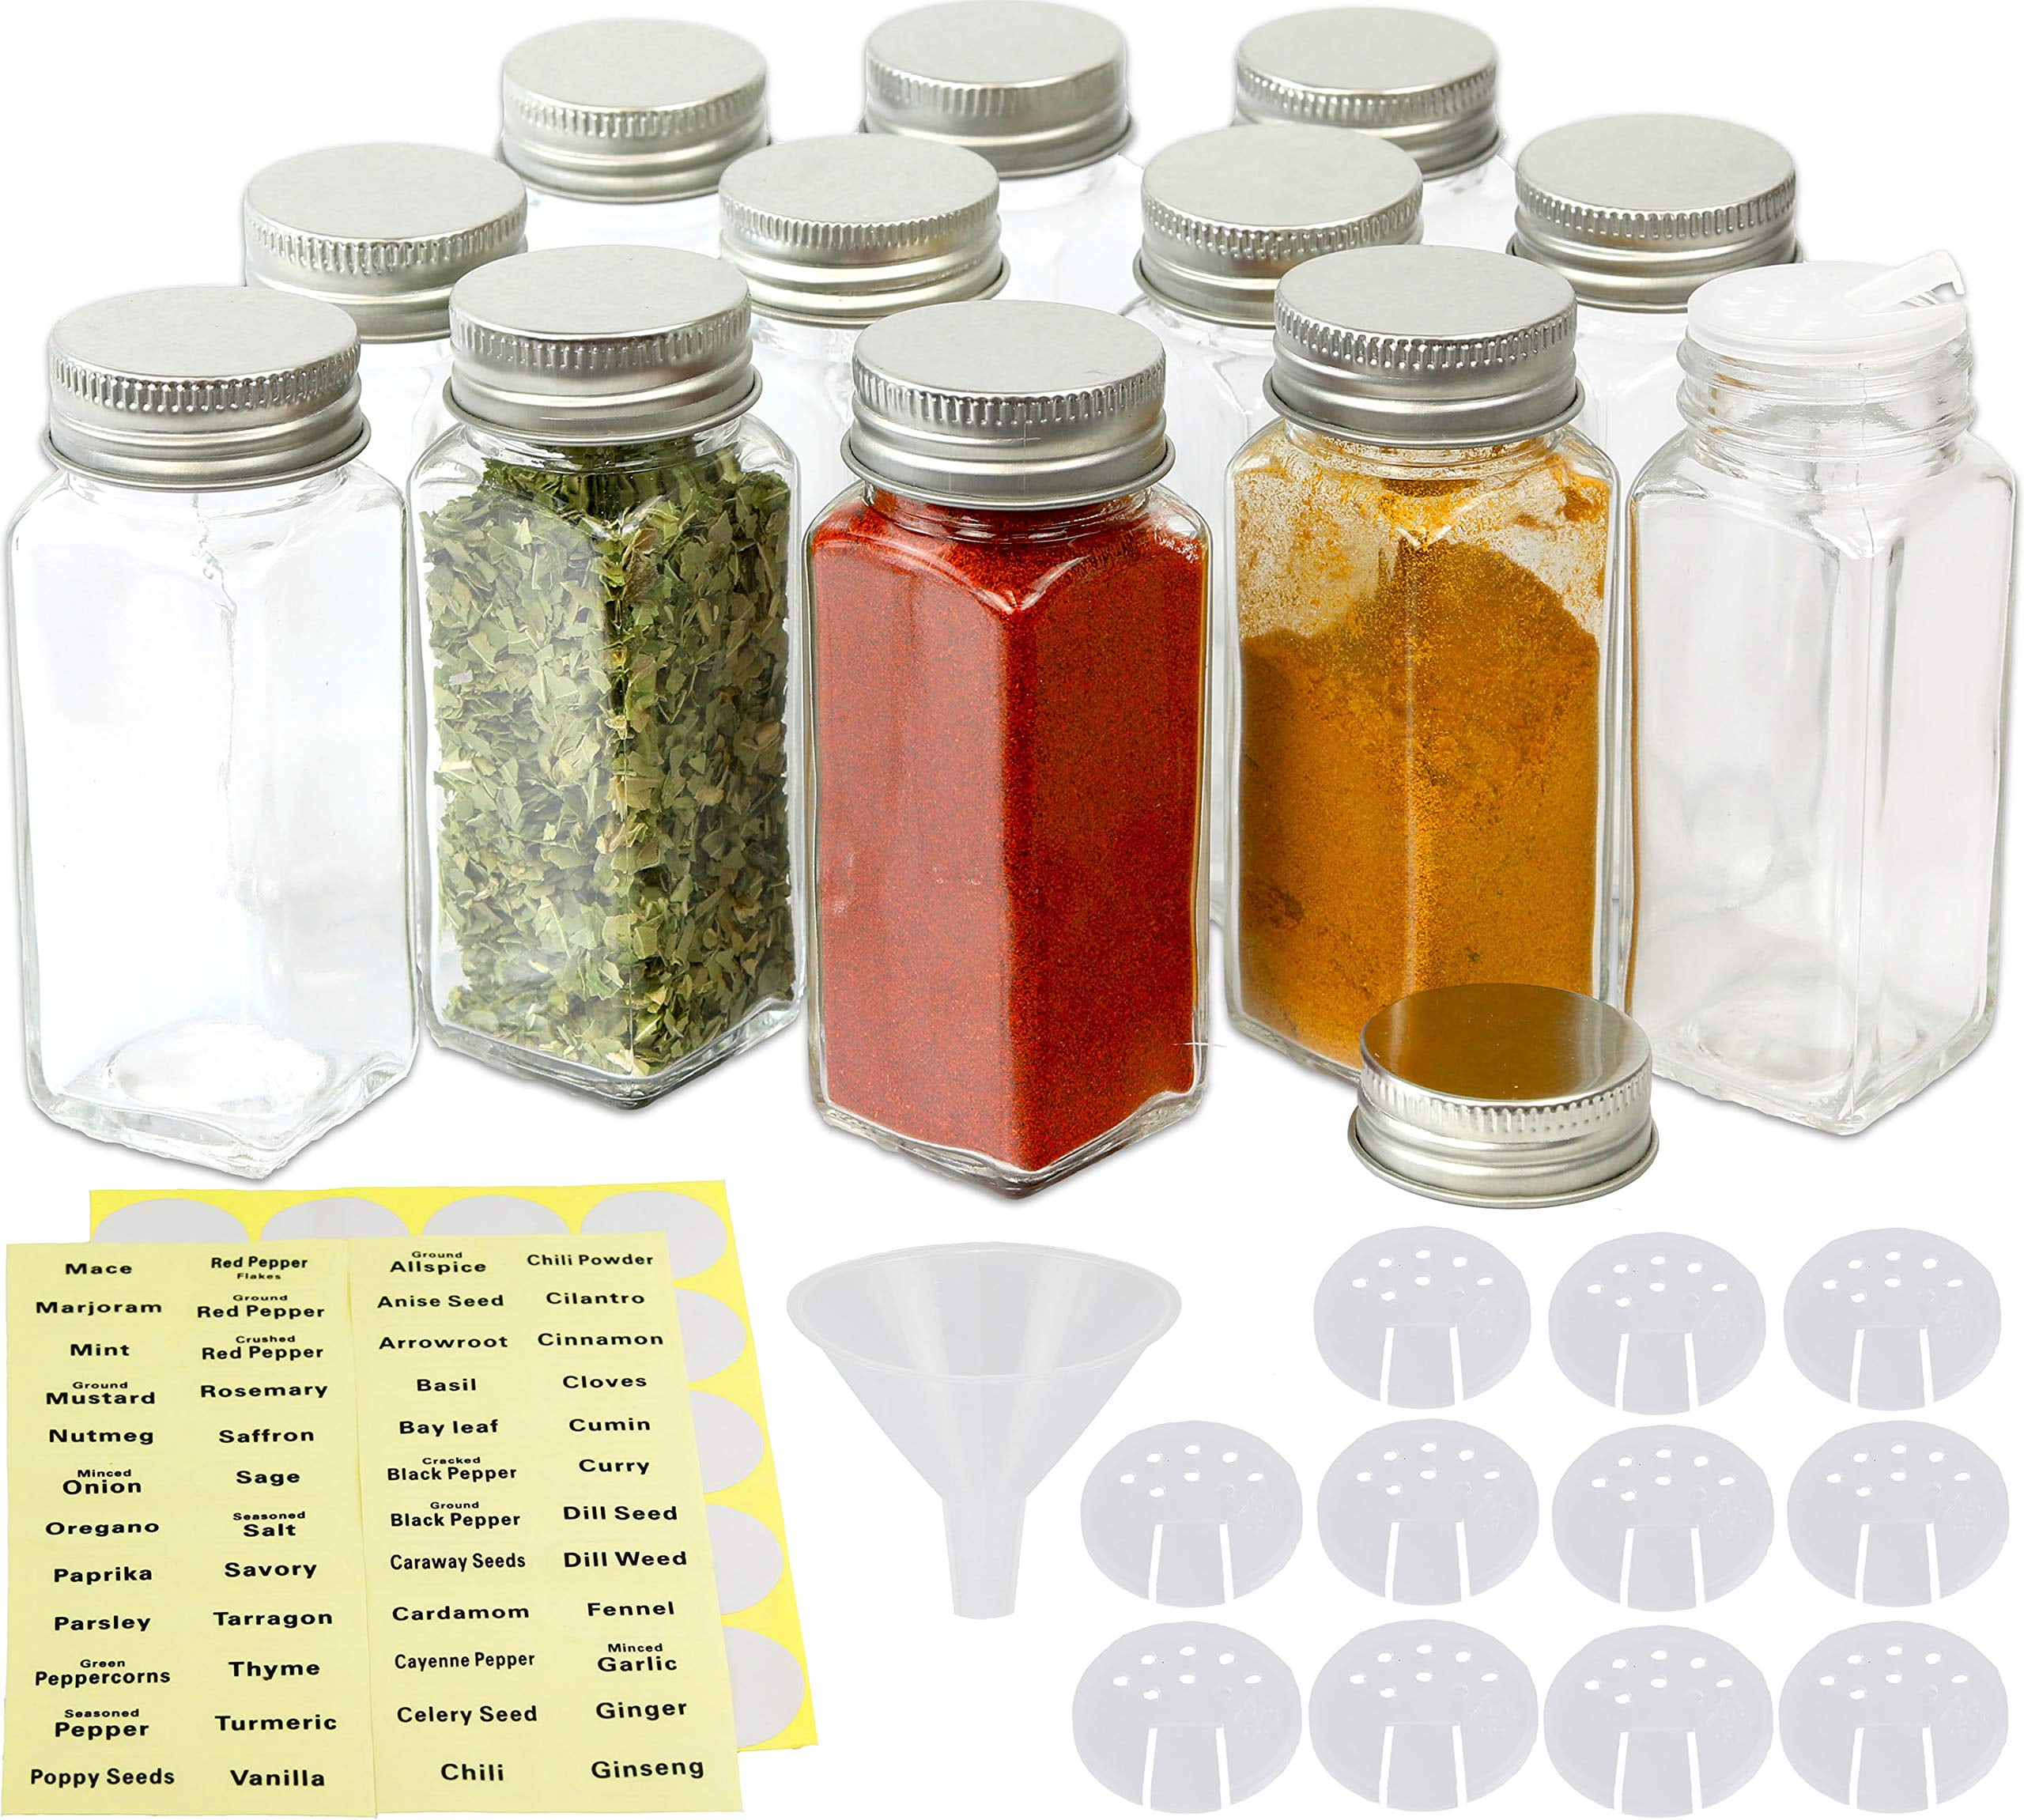 4oz Spice Jars - 18-Pack – HausLogic